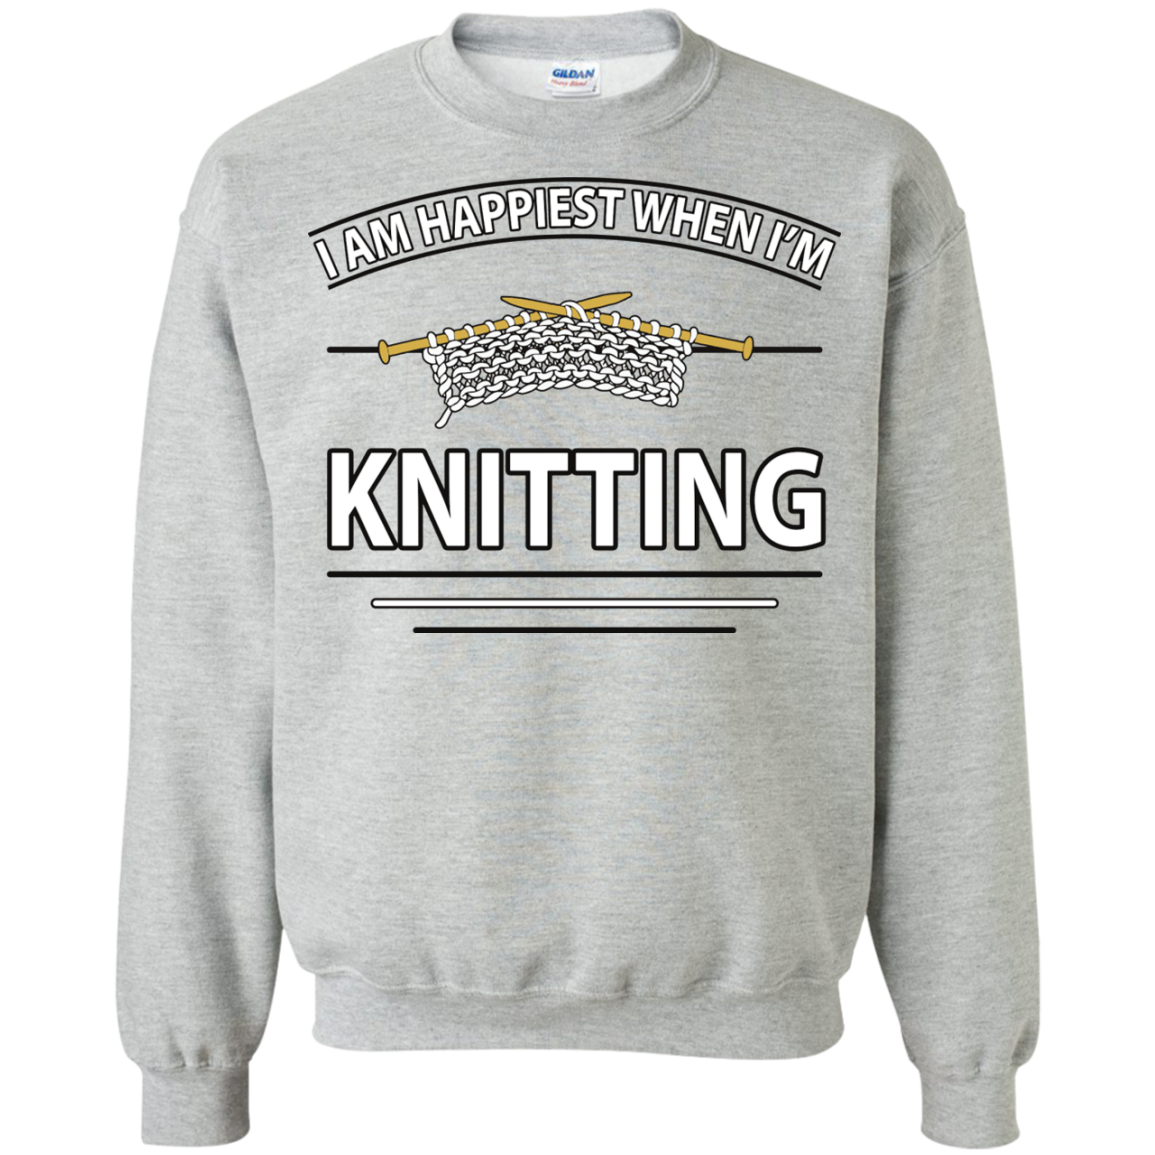 I Am Happiest When I'm Knitting Crewneck Sweatshirts - Crafter4Life - 2